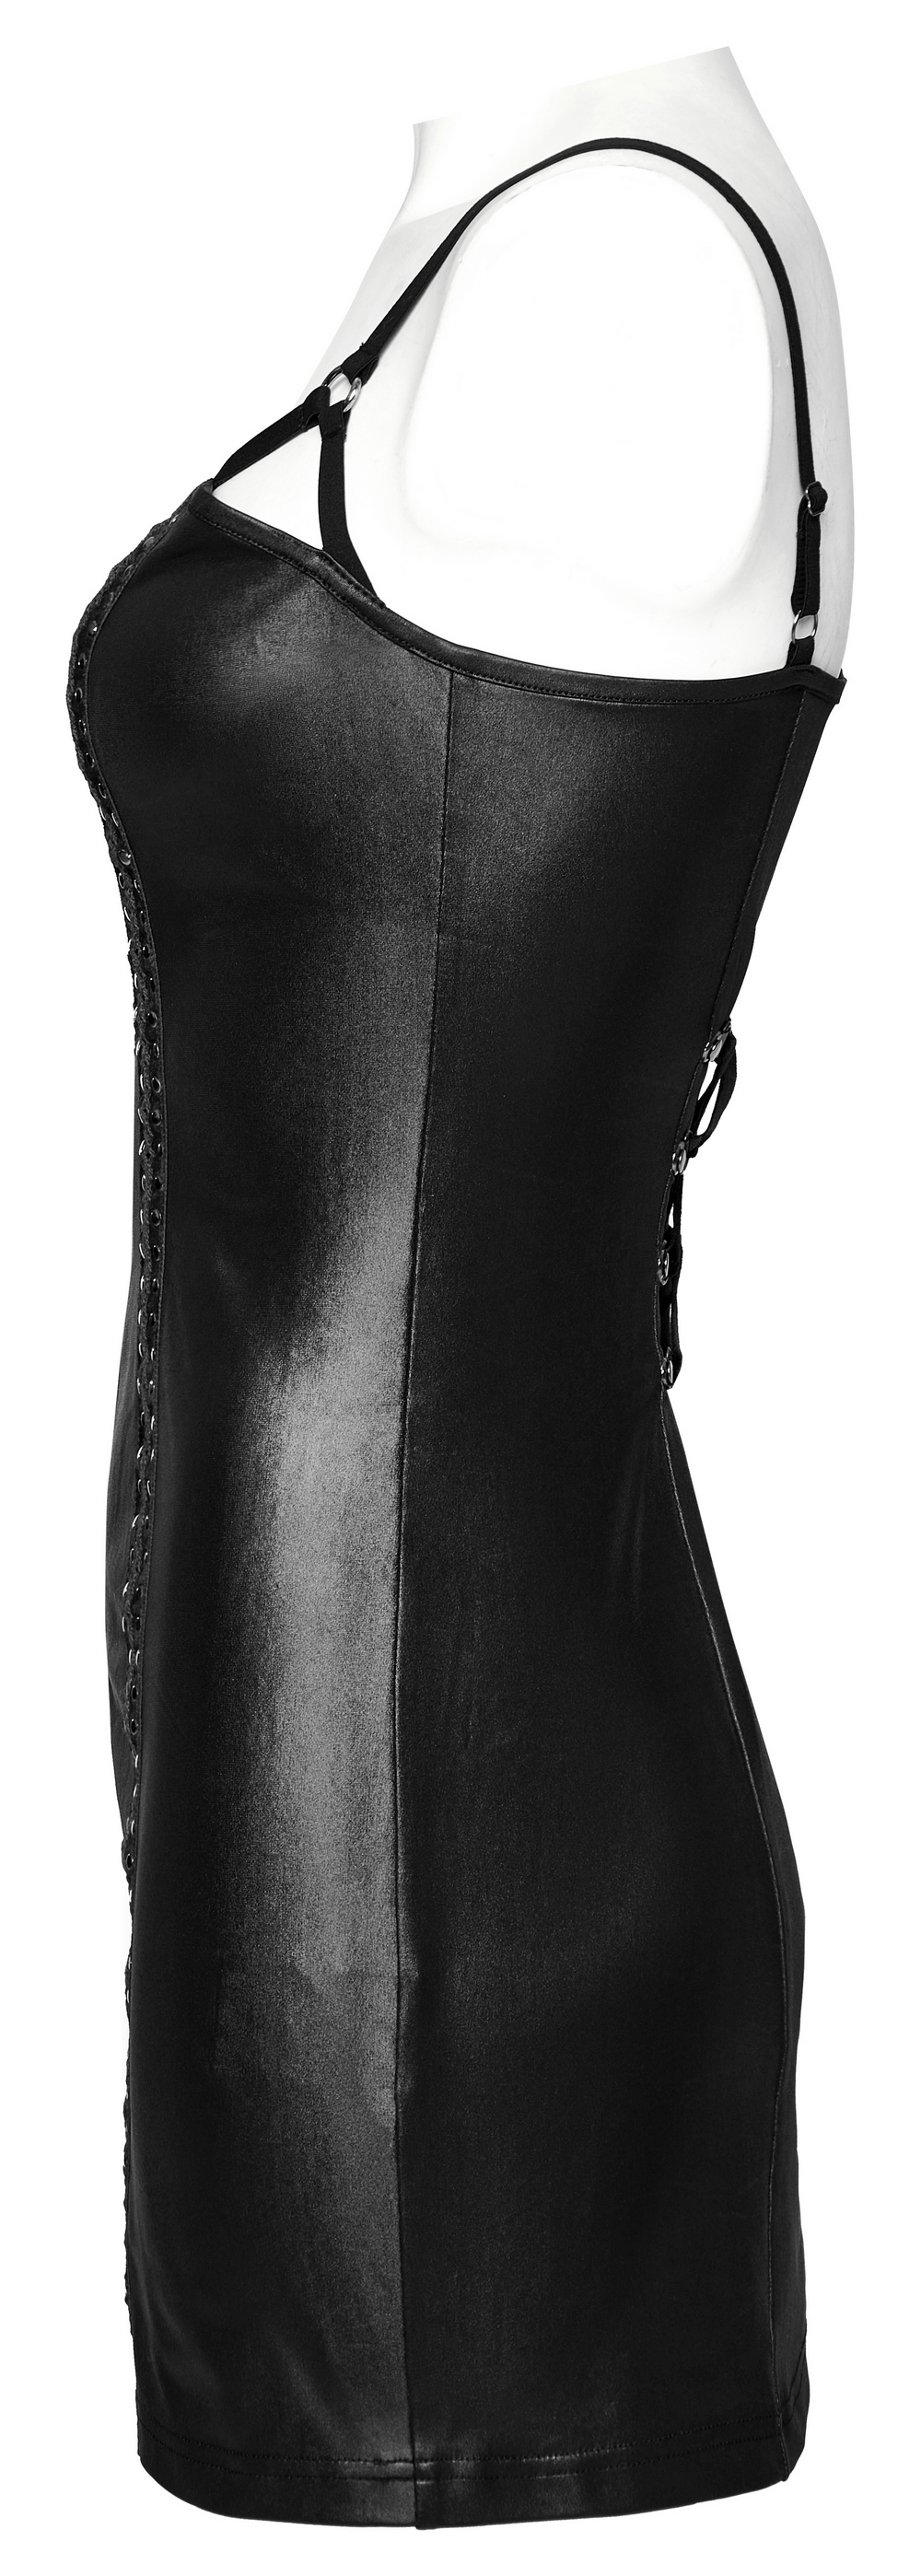 Black Lace Up Back Slim Fit Dress With Rivets Detailing